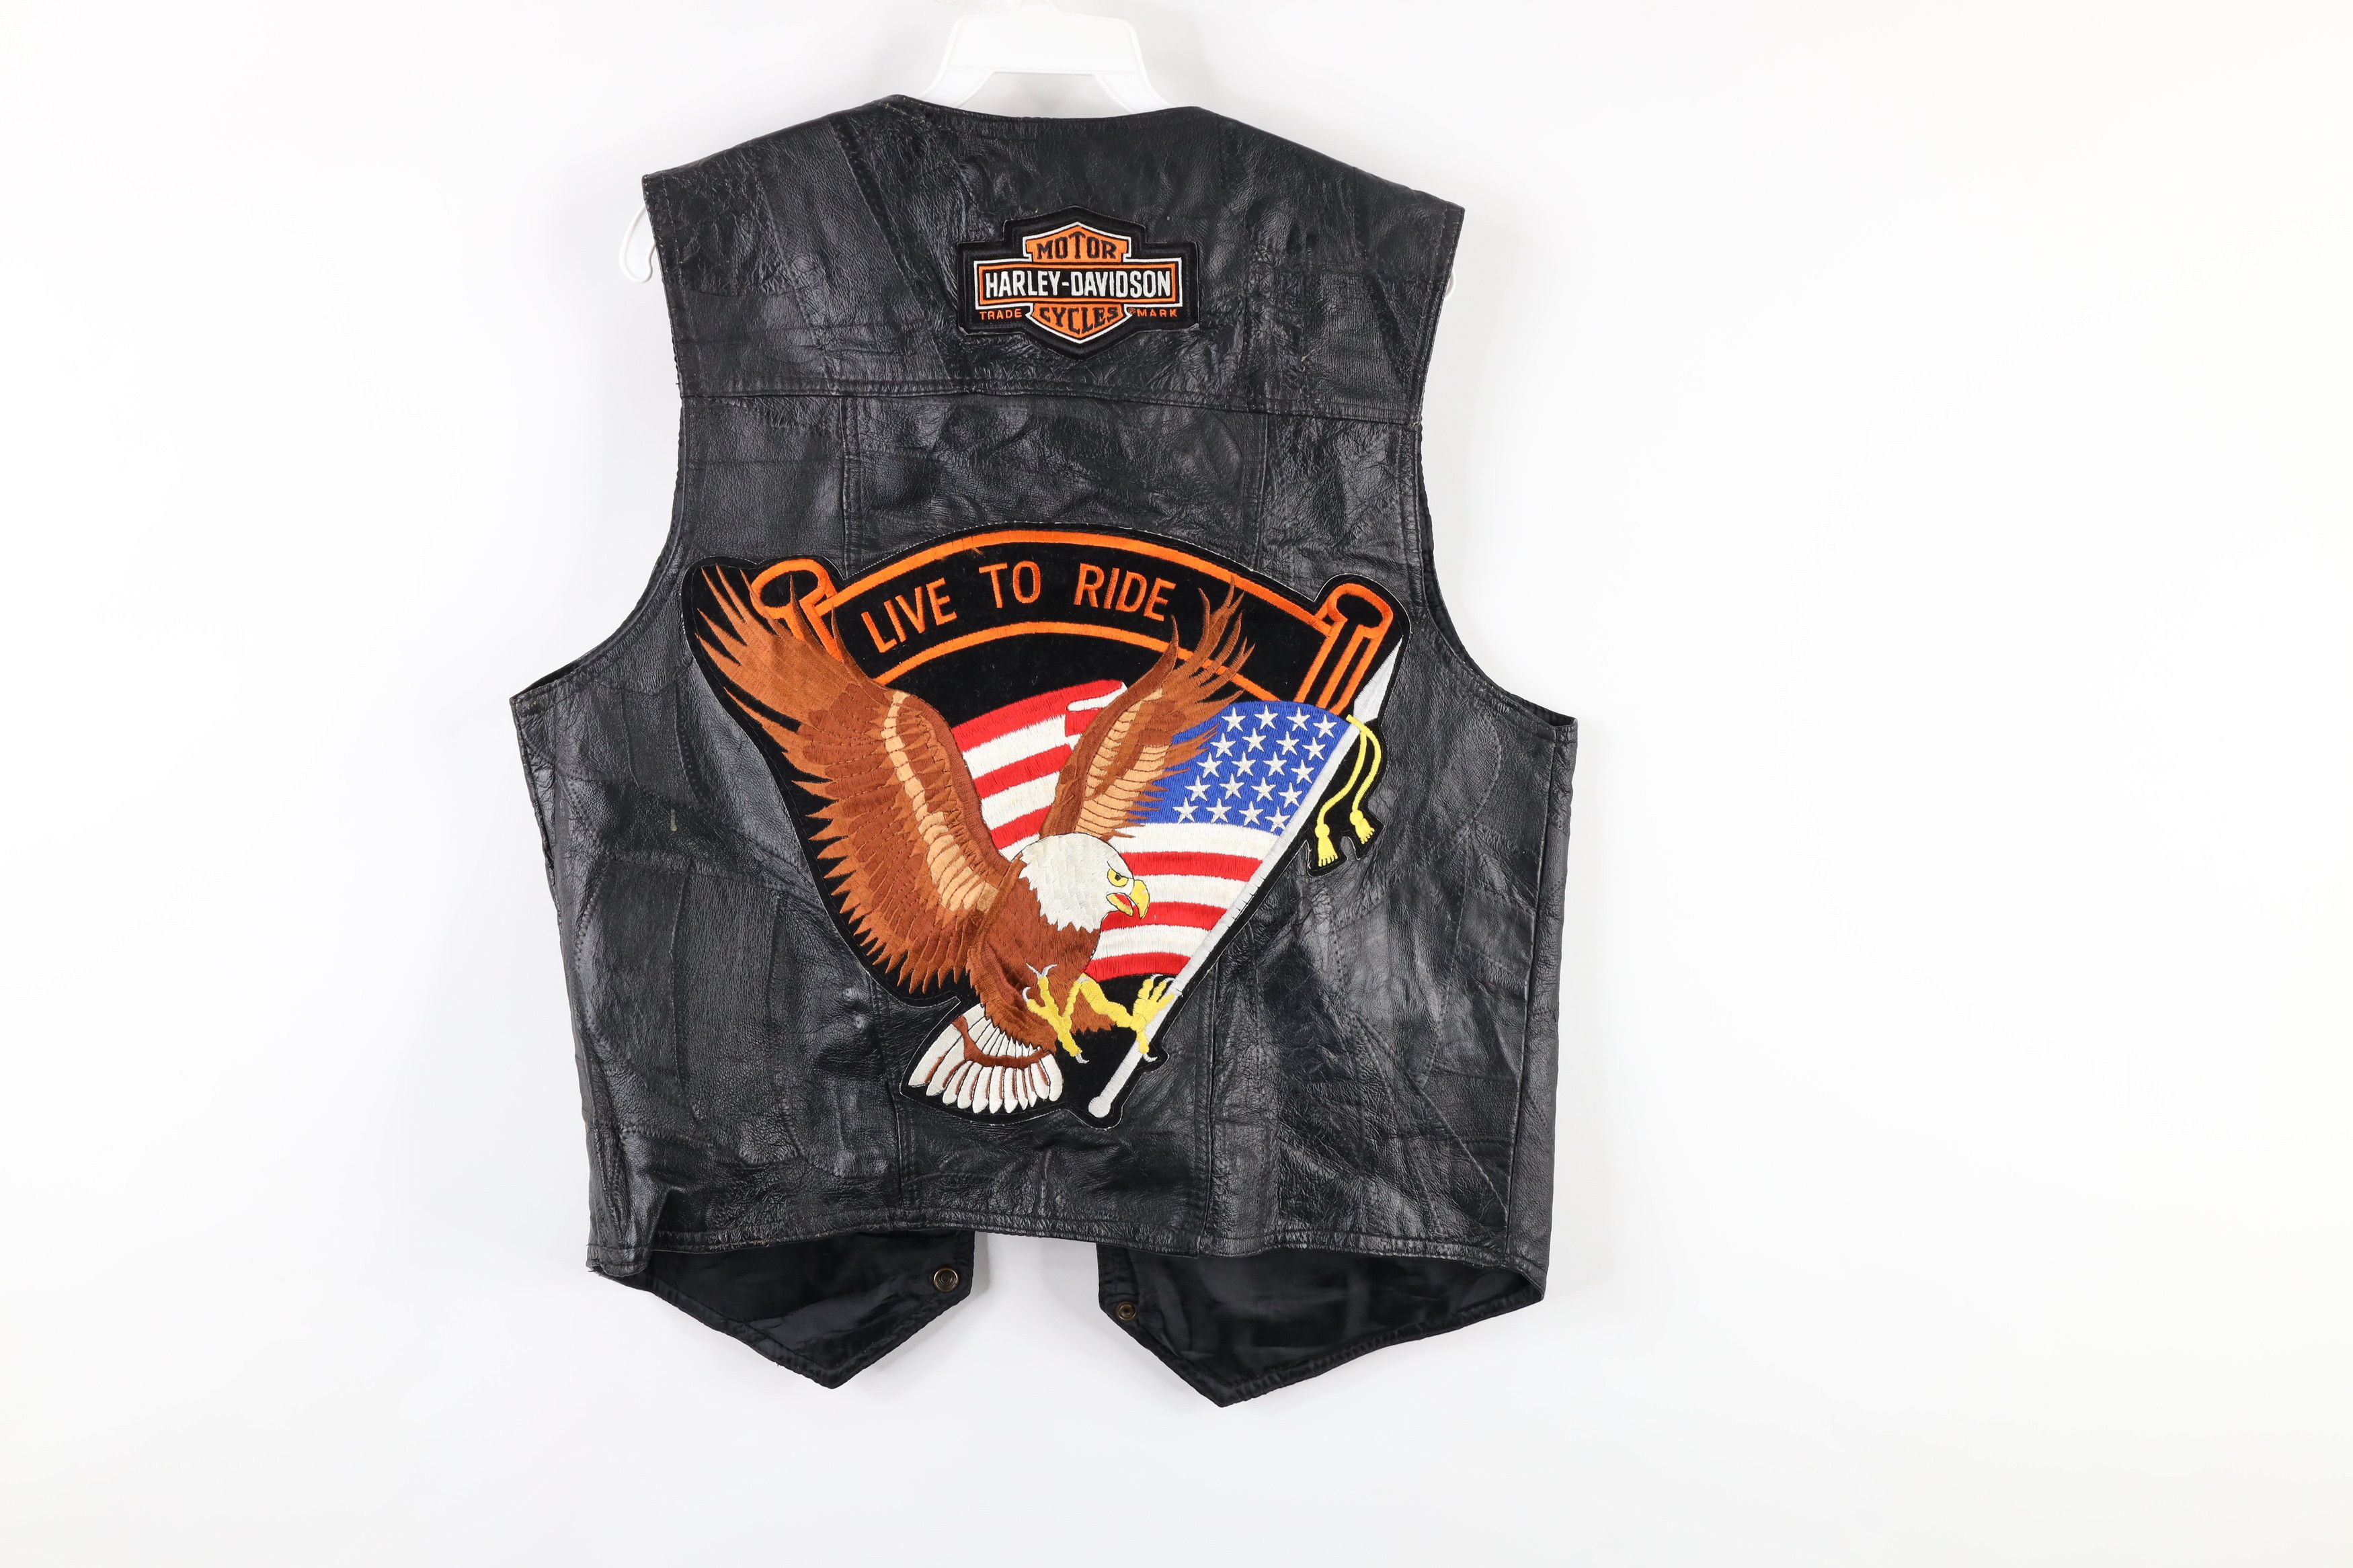 Vintage Vintage Biketoberfest Harley Davidson Leather Vest Black Size US M / EU 48-50 / 2 - 7 Thumbnail